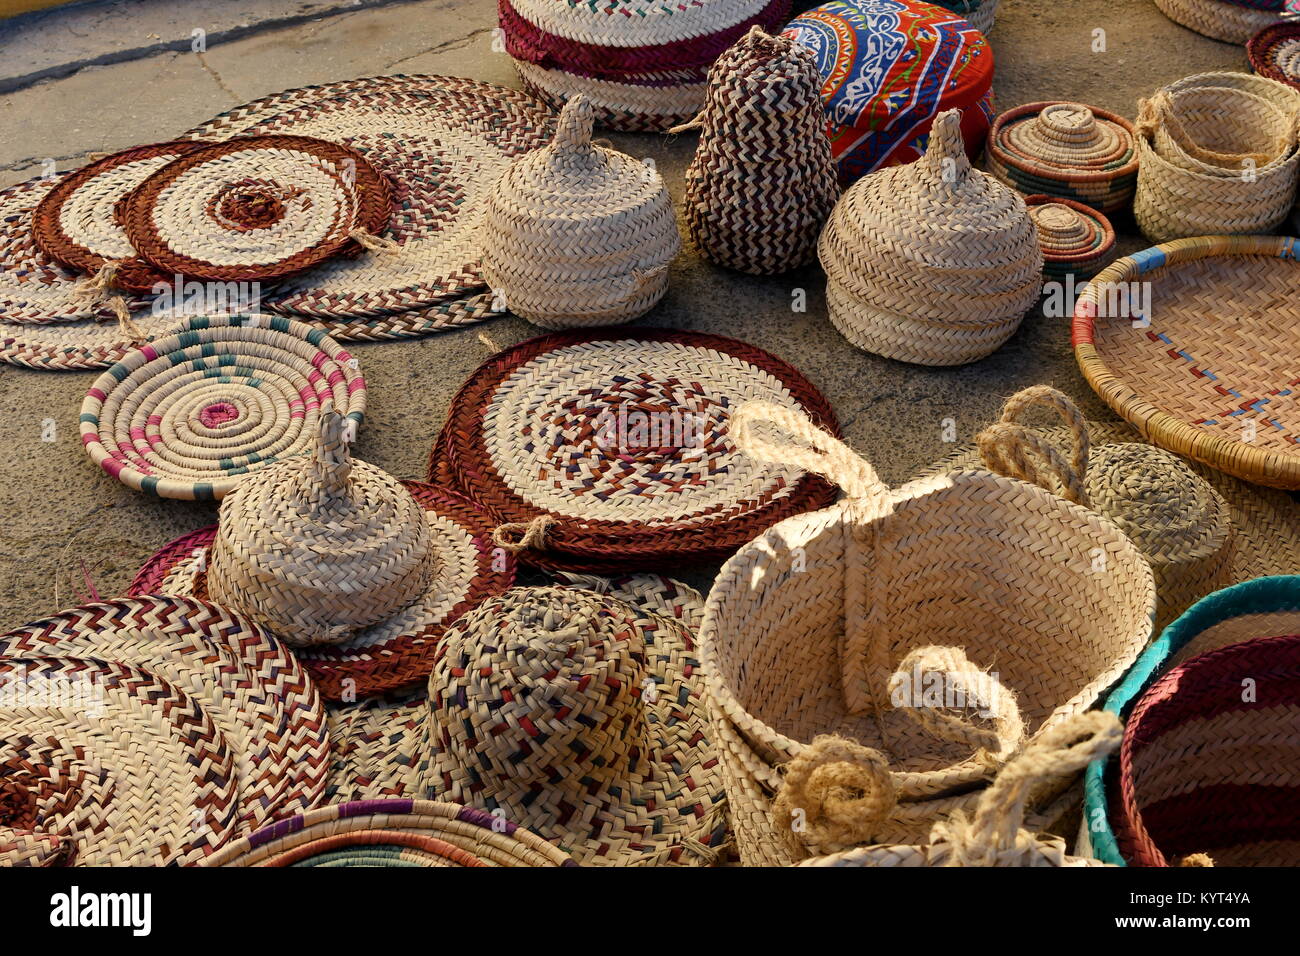 Saudi Arabia Arts and Crafts Handmade Stock Photo - Alamy